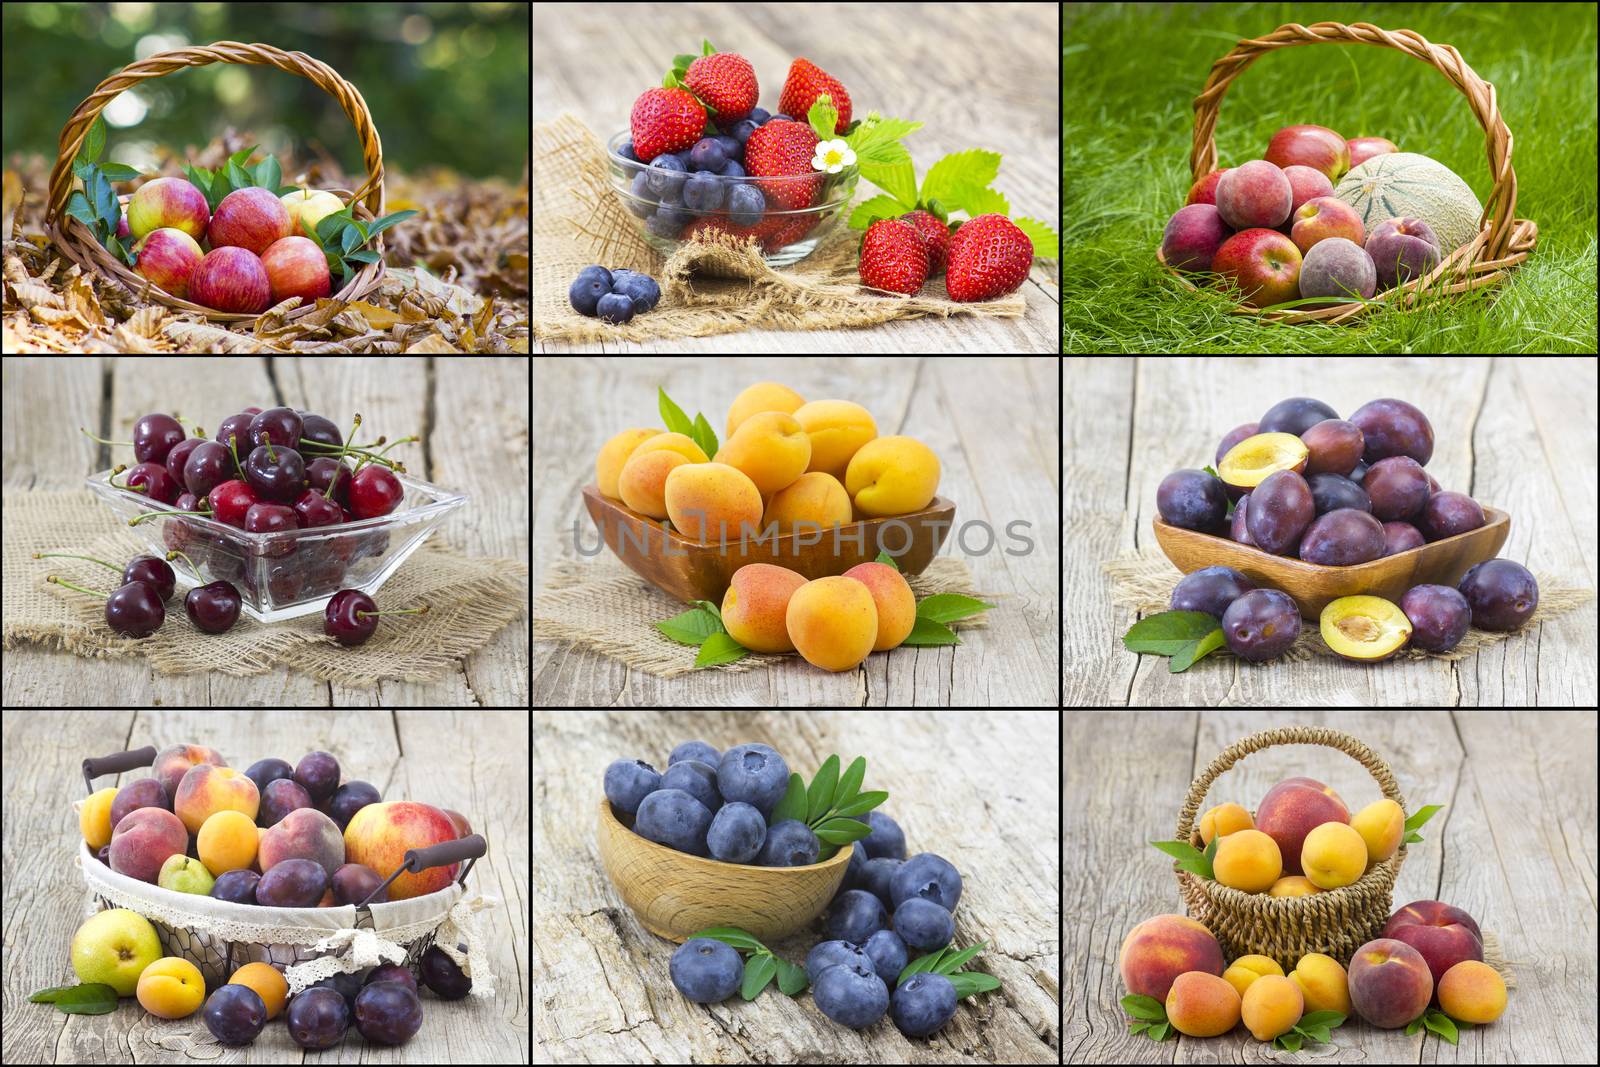 fresh fruits - collage by miradrozdowski